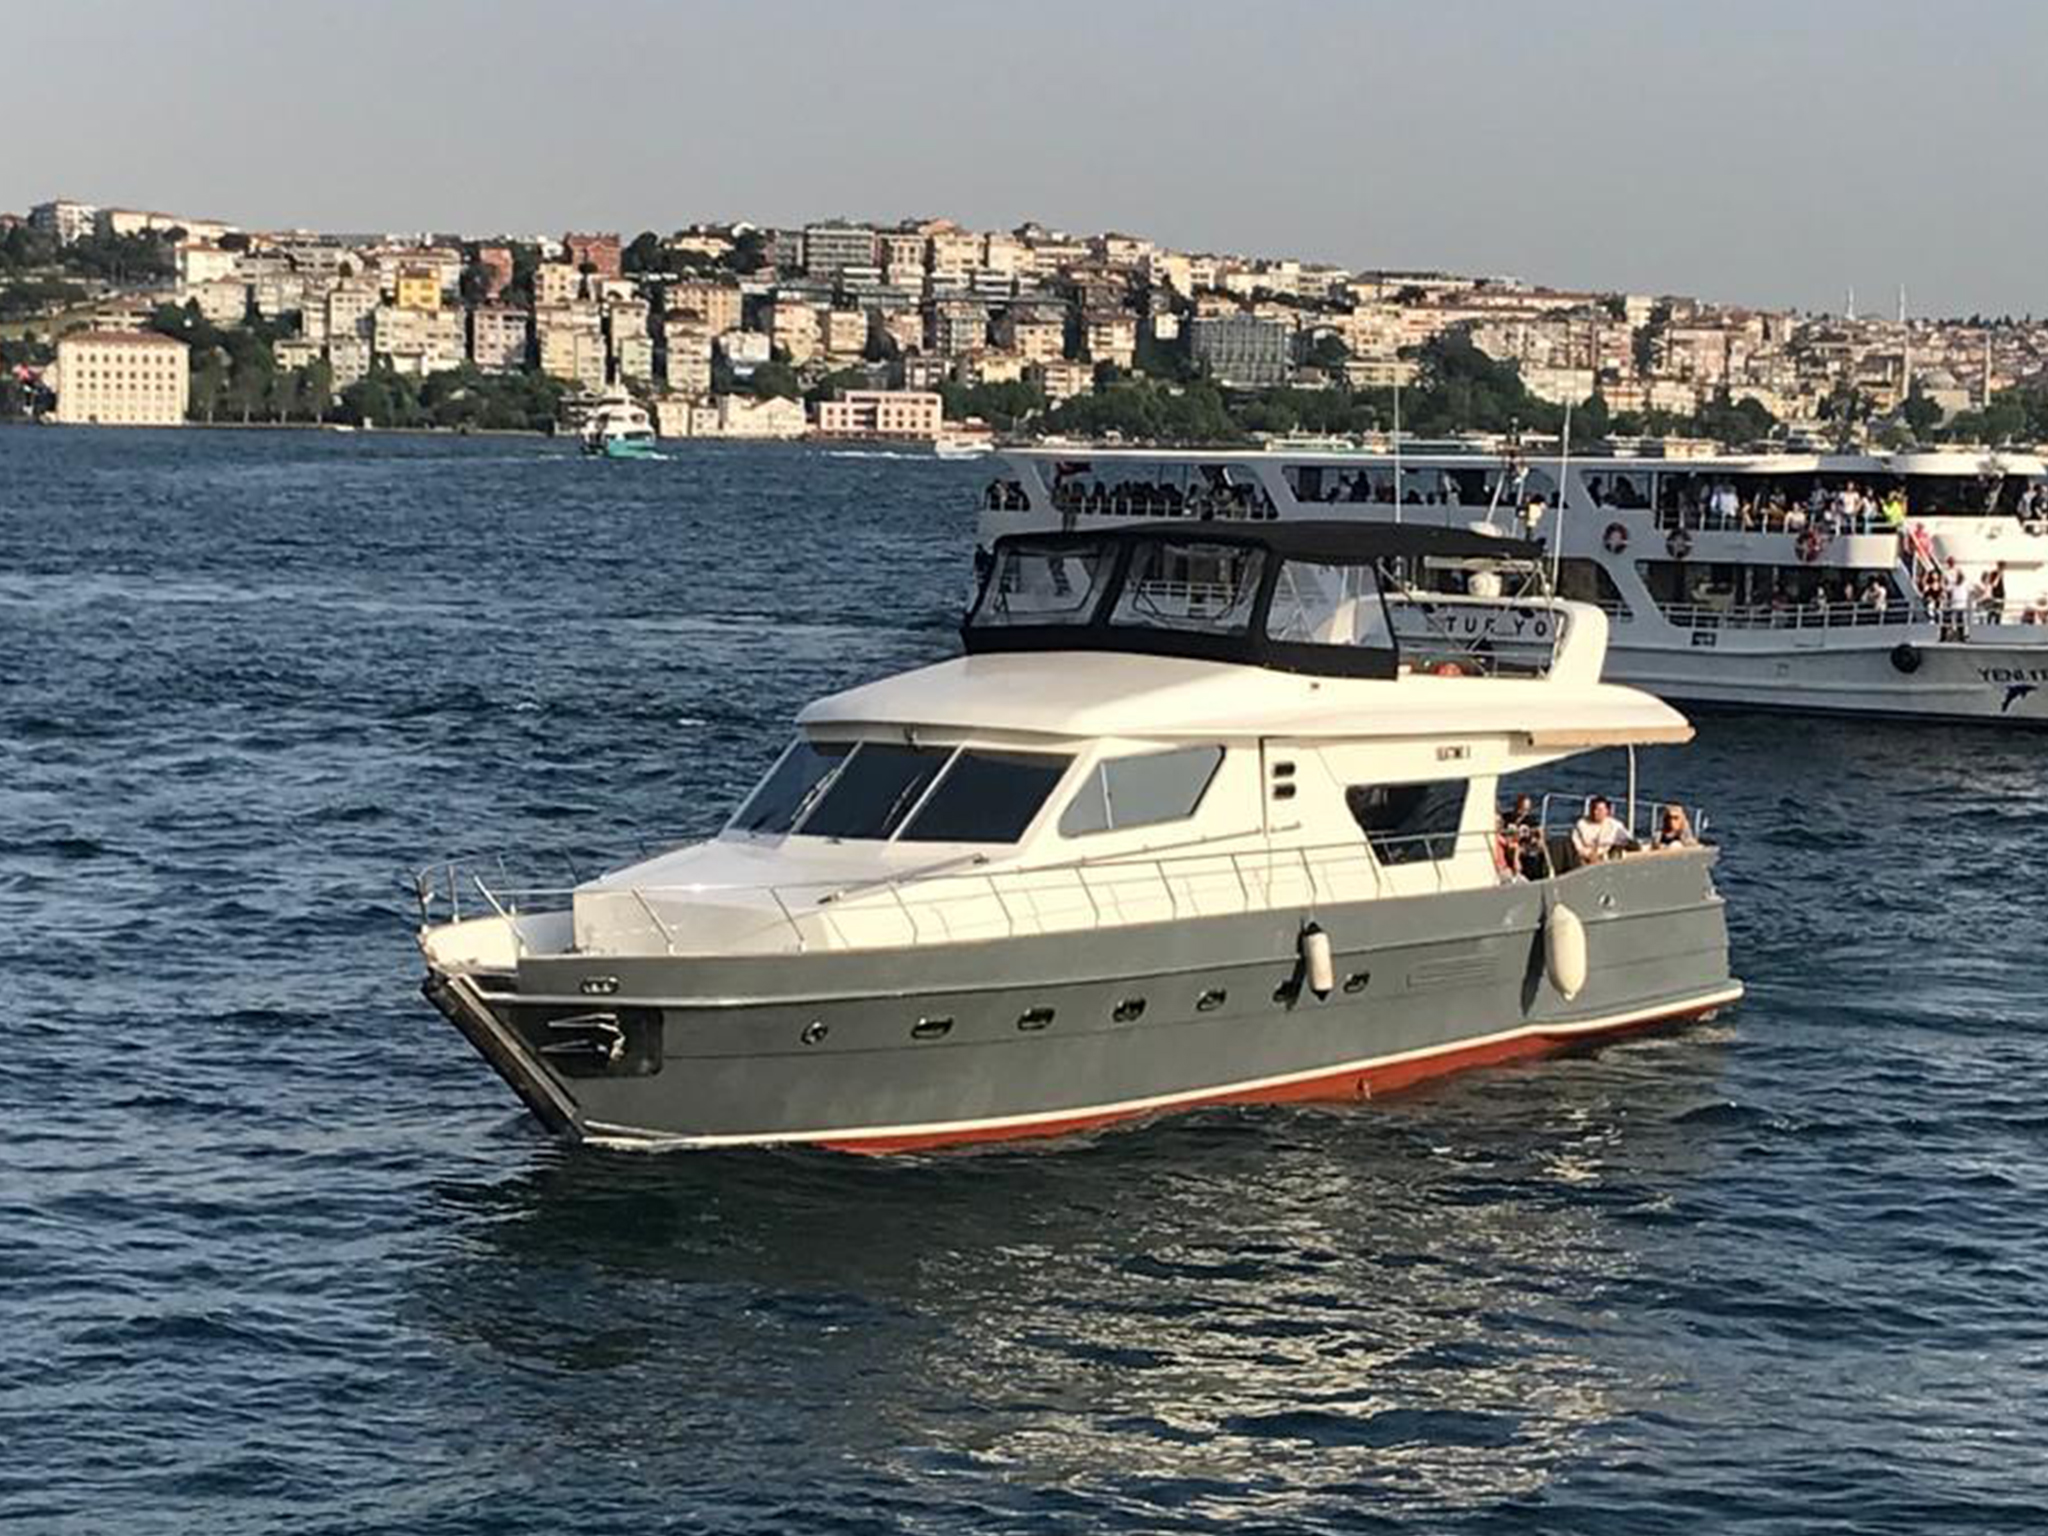 istanbul bosphorus dinner cruise with entertainment